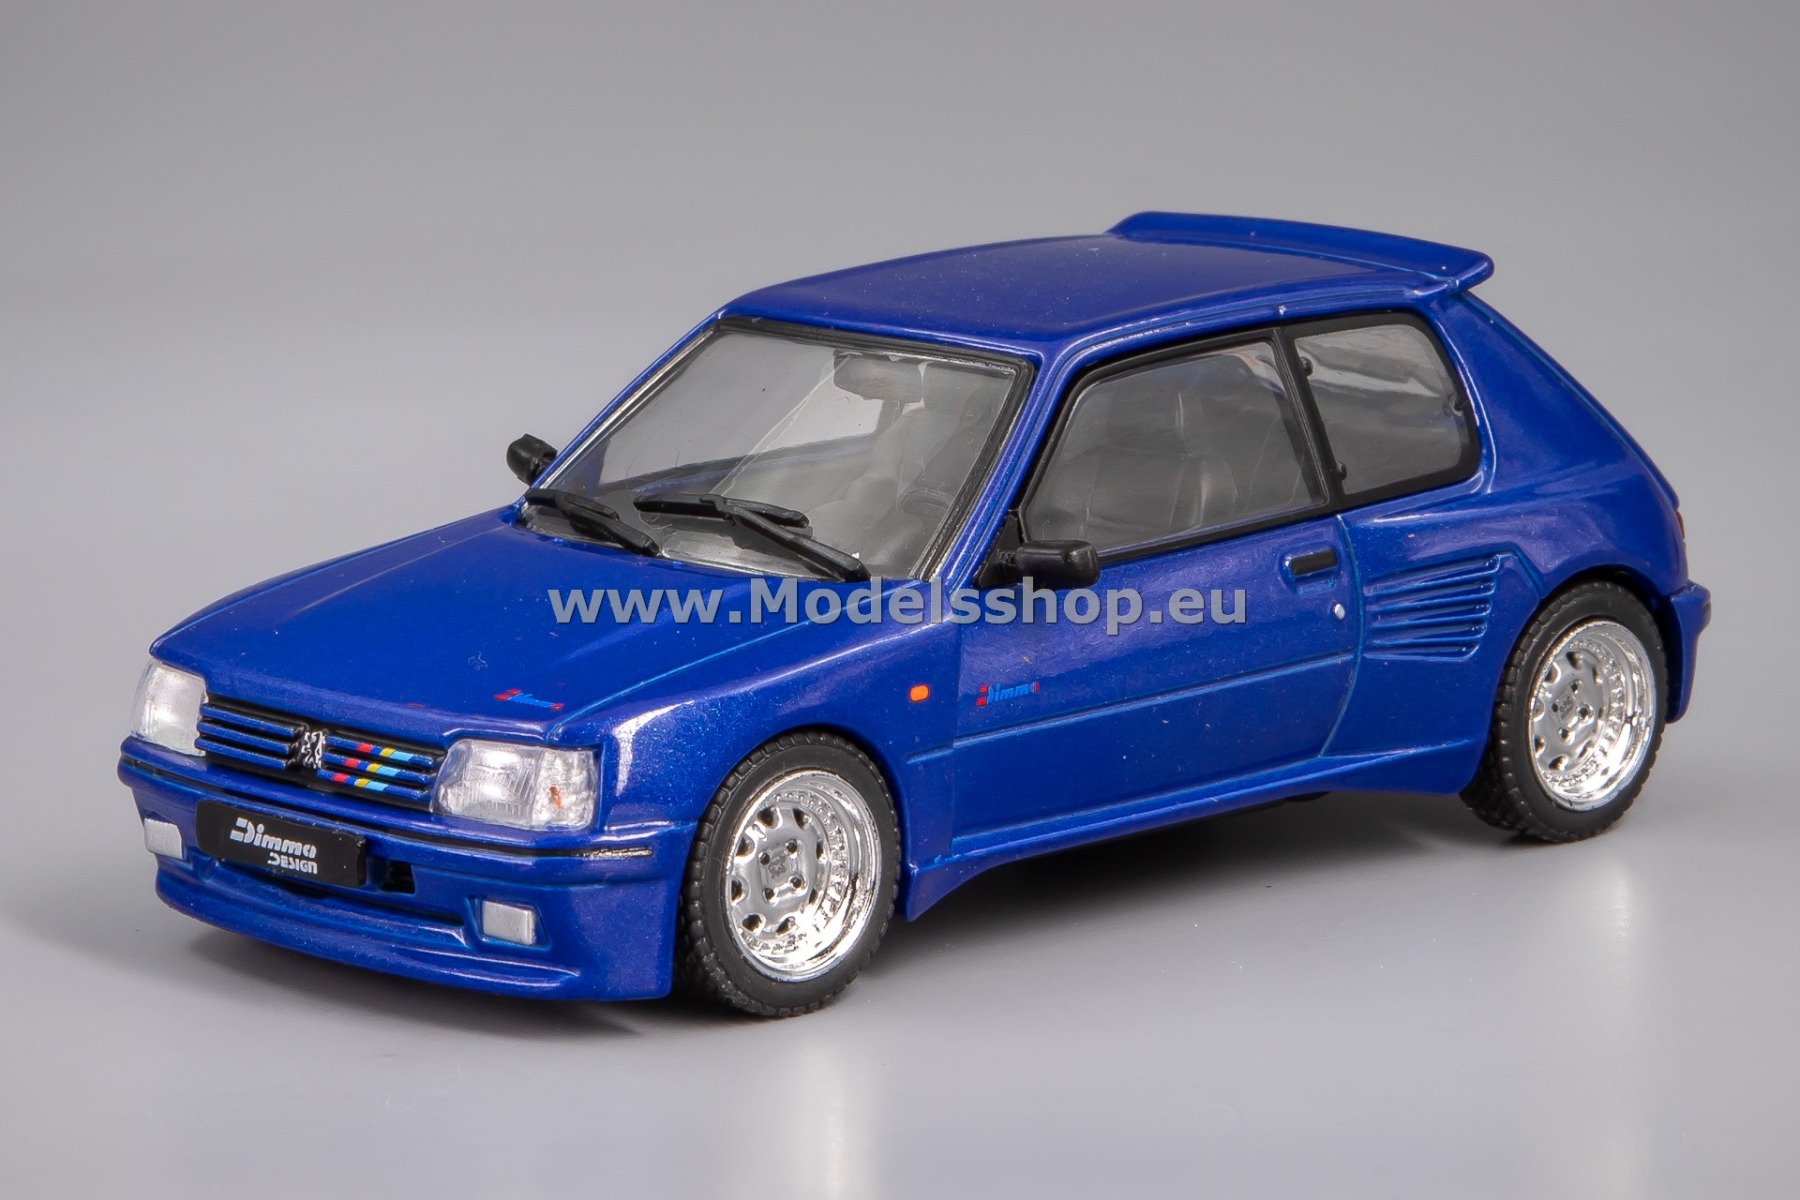 Solido S4310803 Peugeot 205 Dimma bodykit, 1989 /blue//